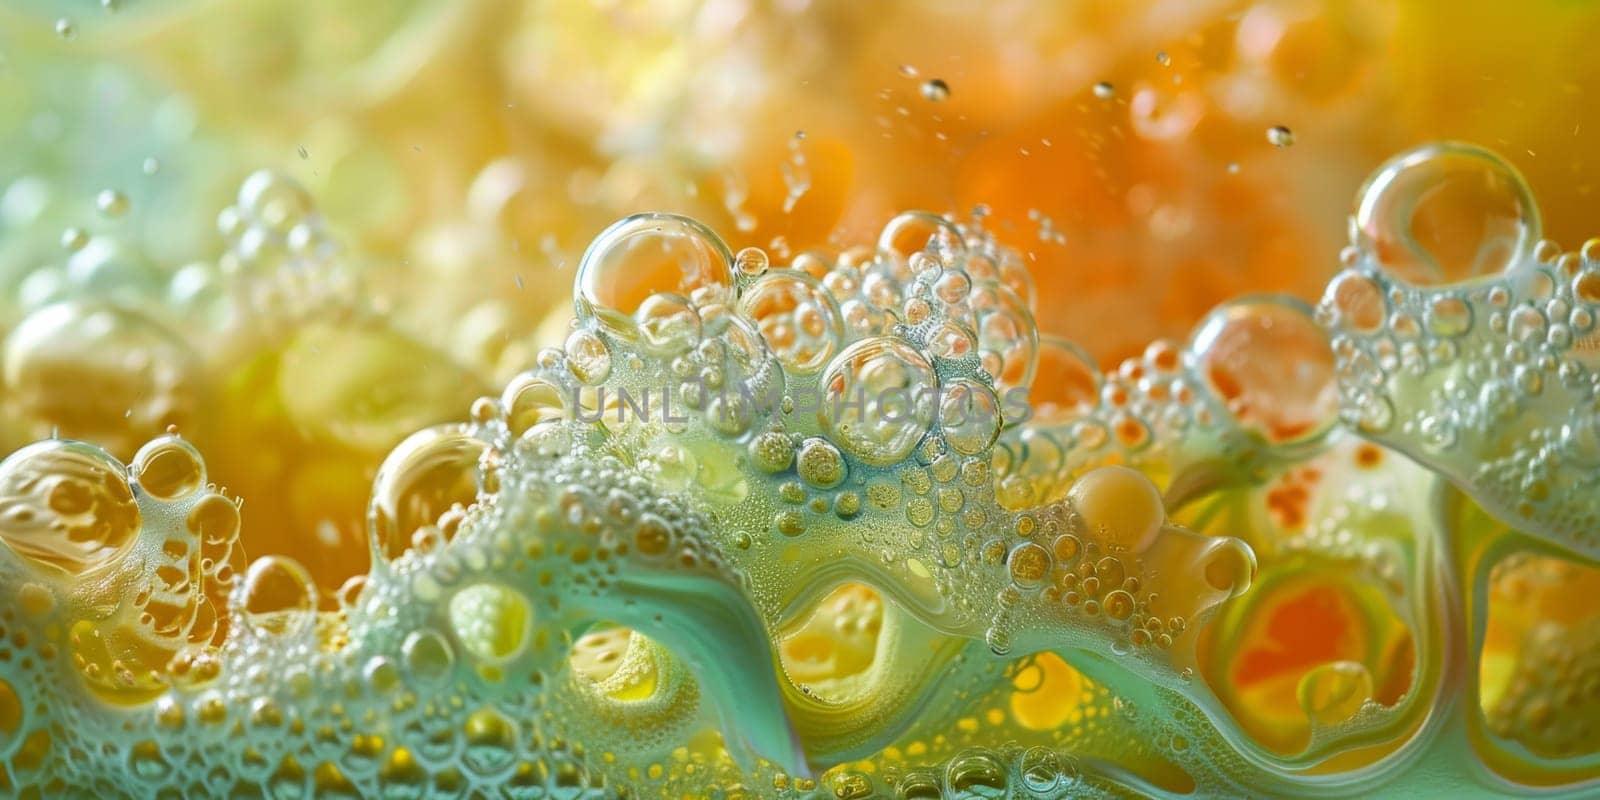 Soap foam or the swirling eddies of ink droplets in a water